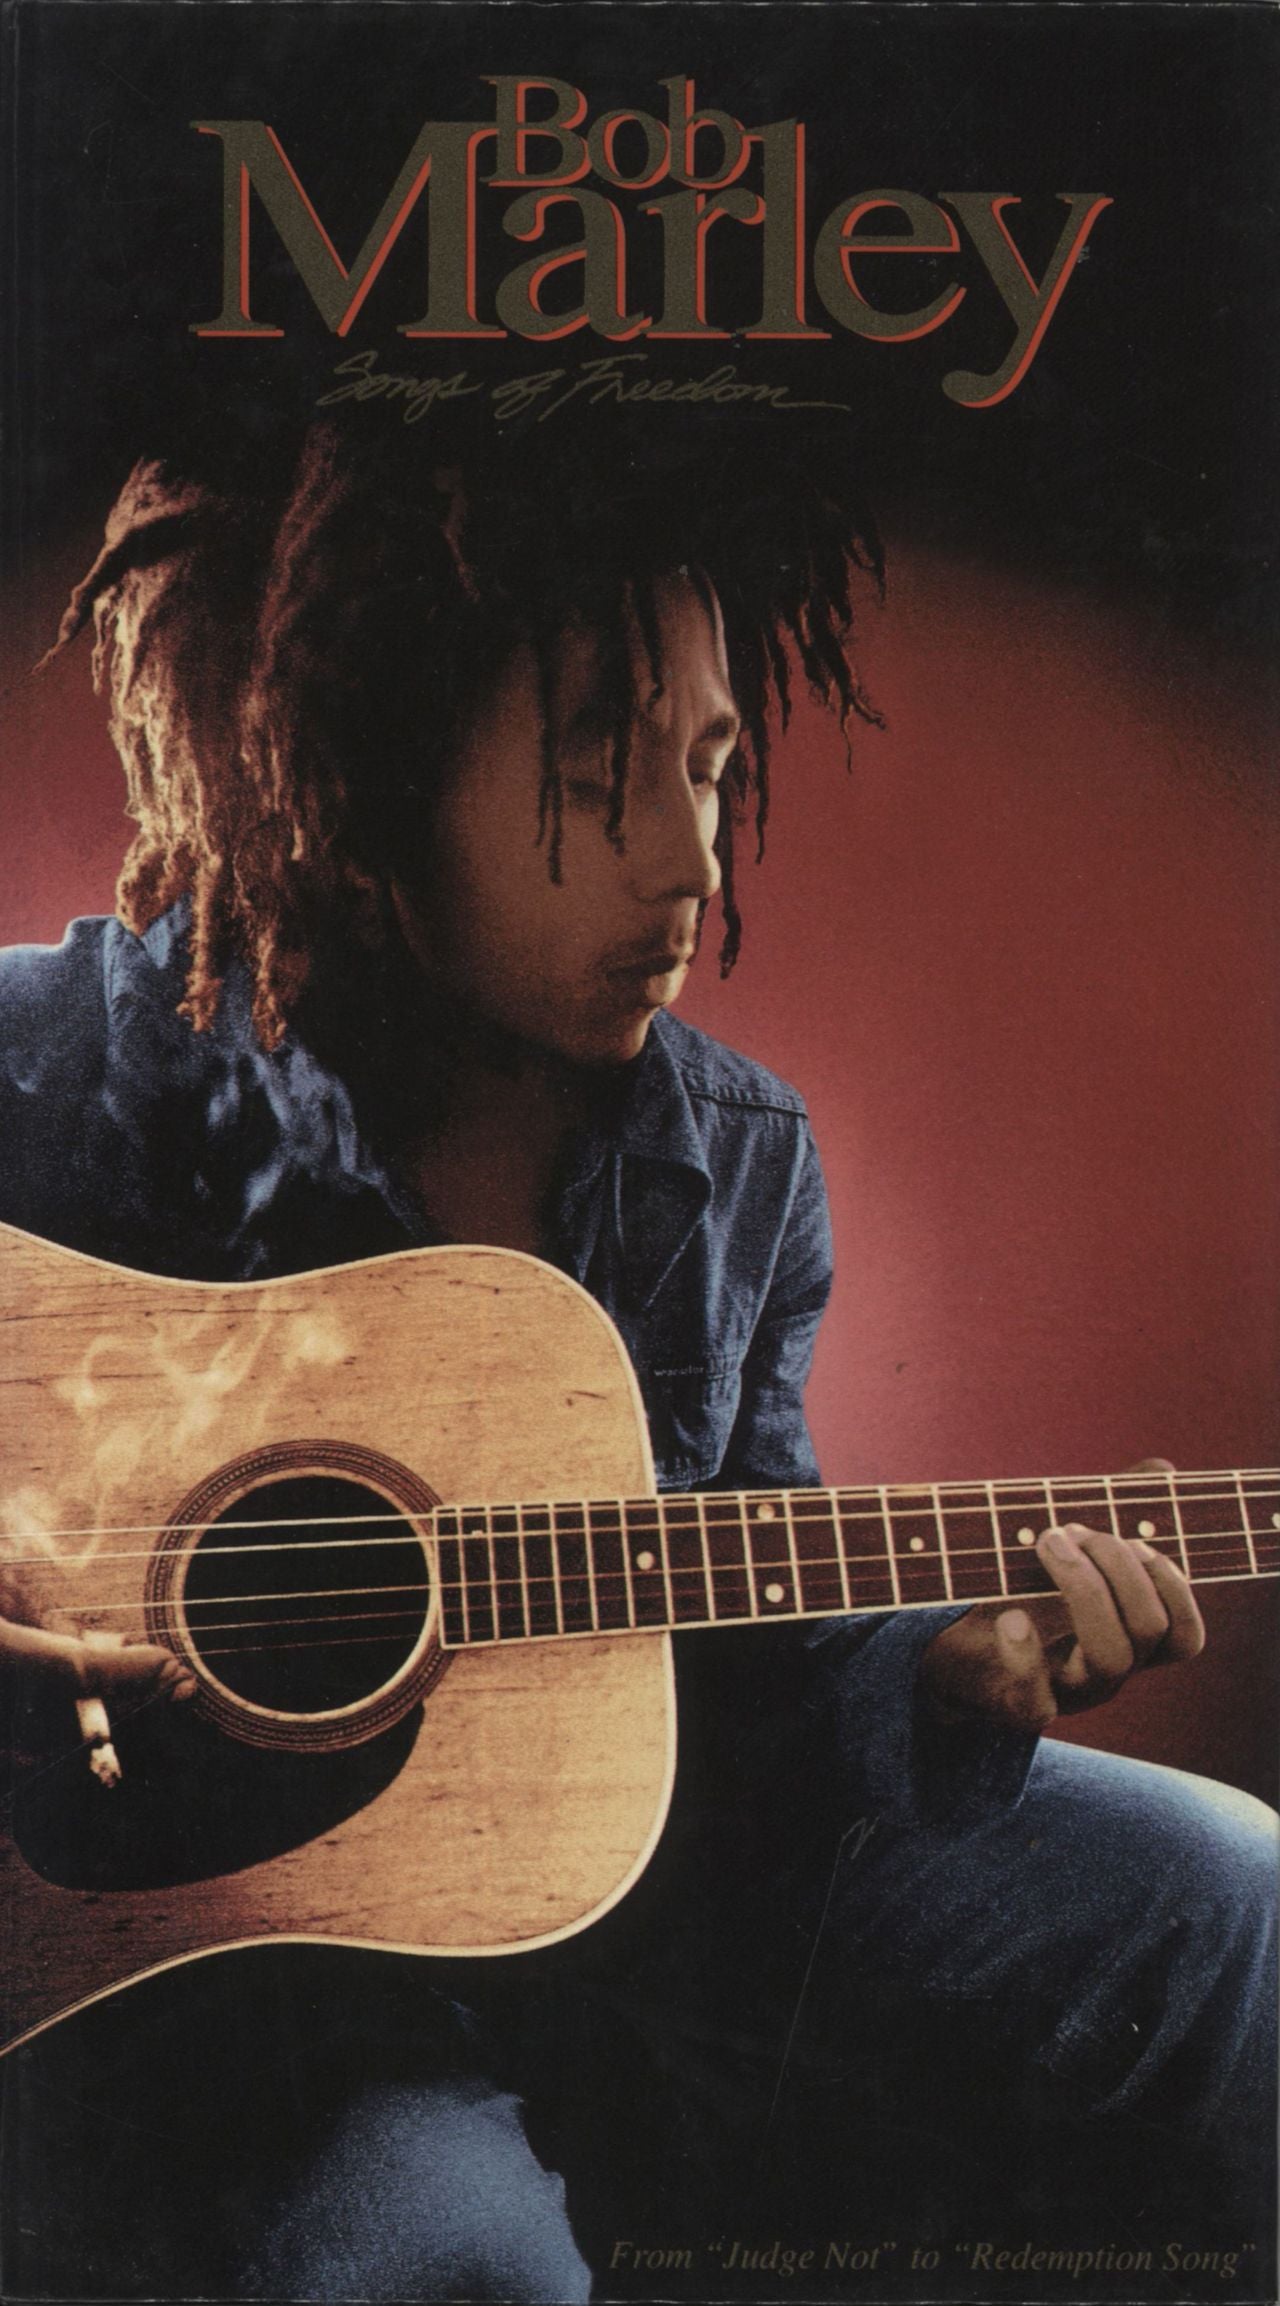 Bob Marley & The Wailers Songs Of Freedom UK Cd album box set